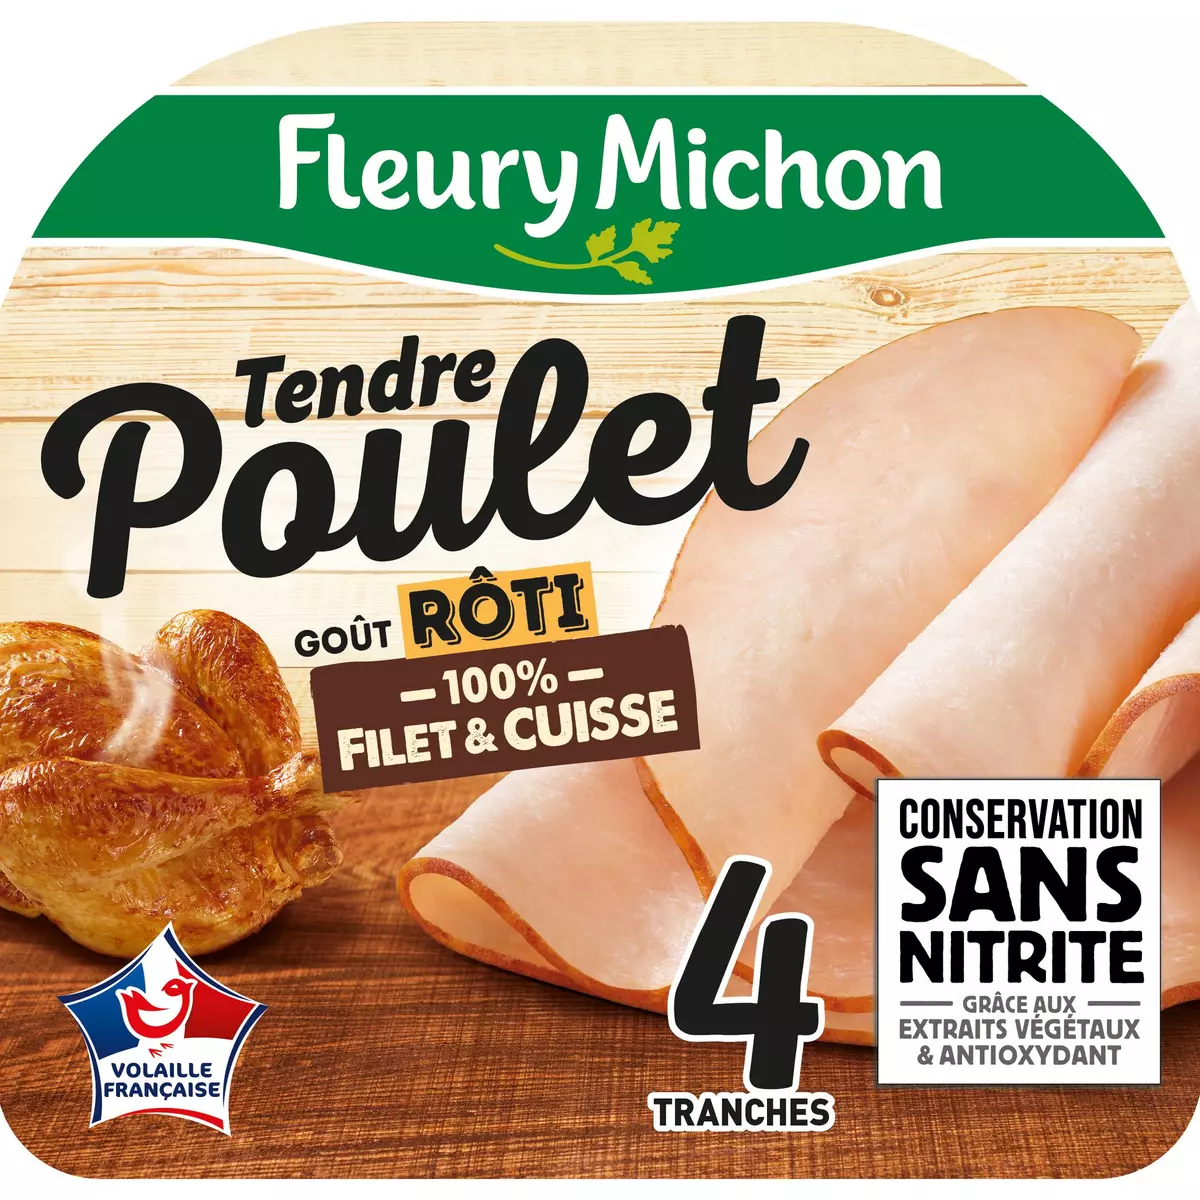 FLEURY MICHON Tendre poulet goût rôti sans nitrite 4 tranches 130g